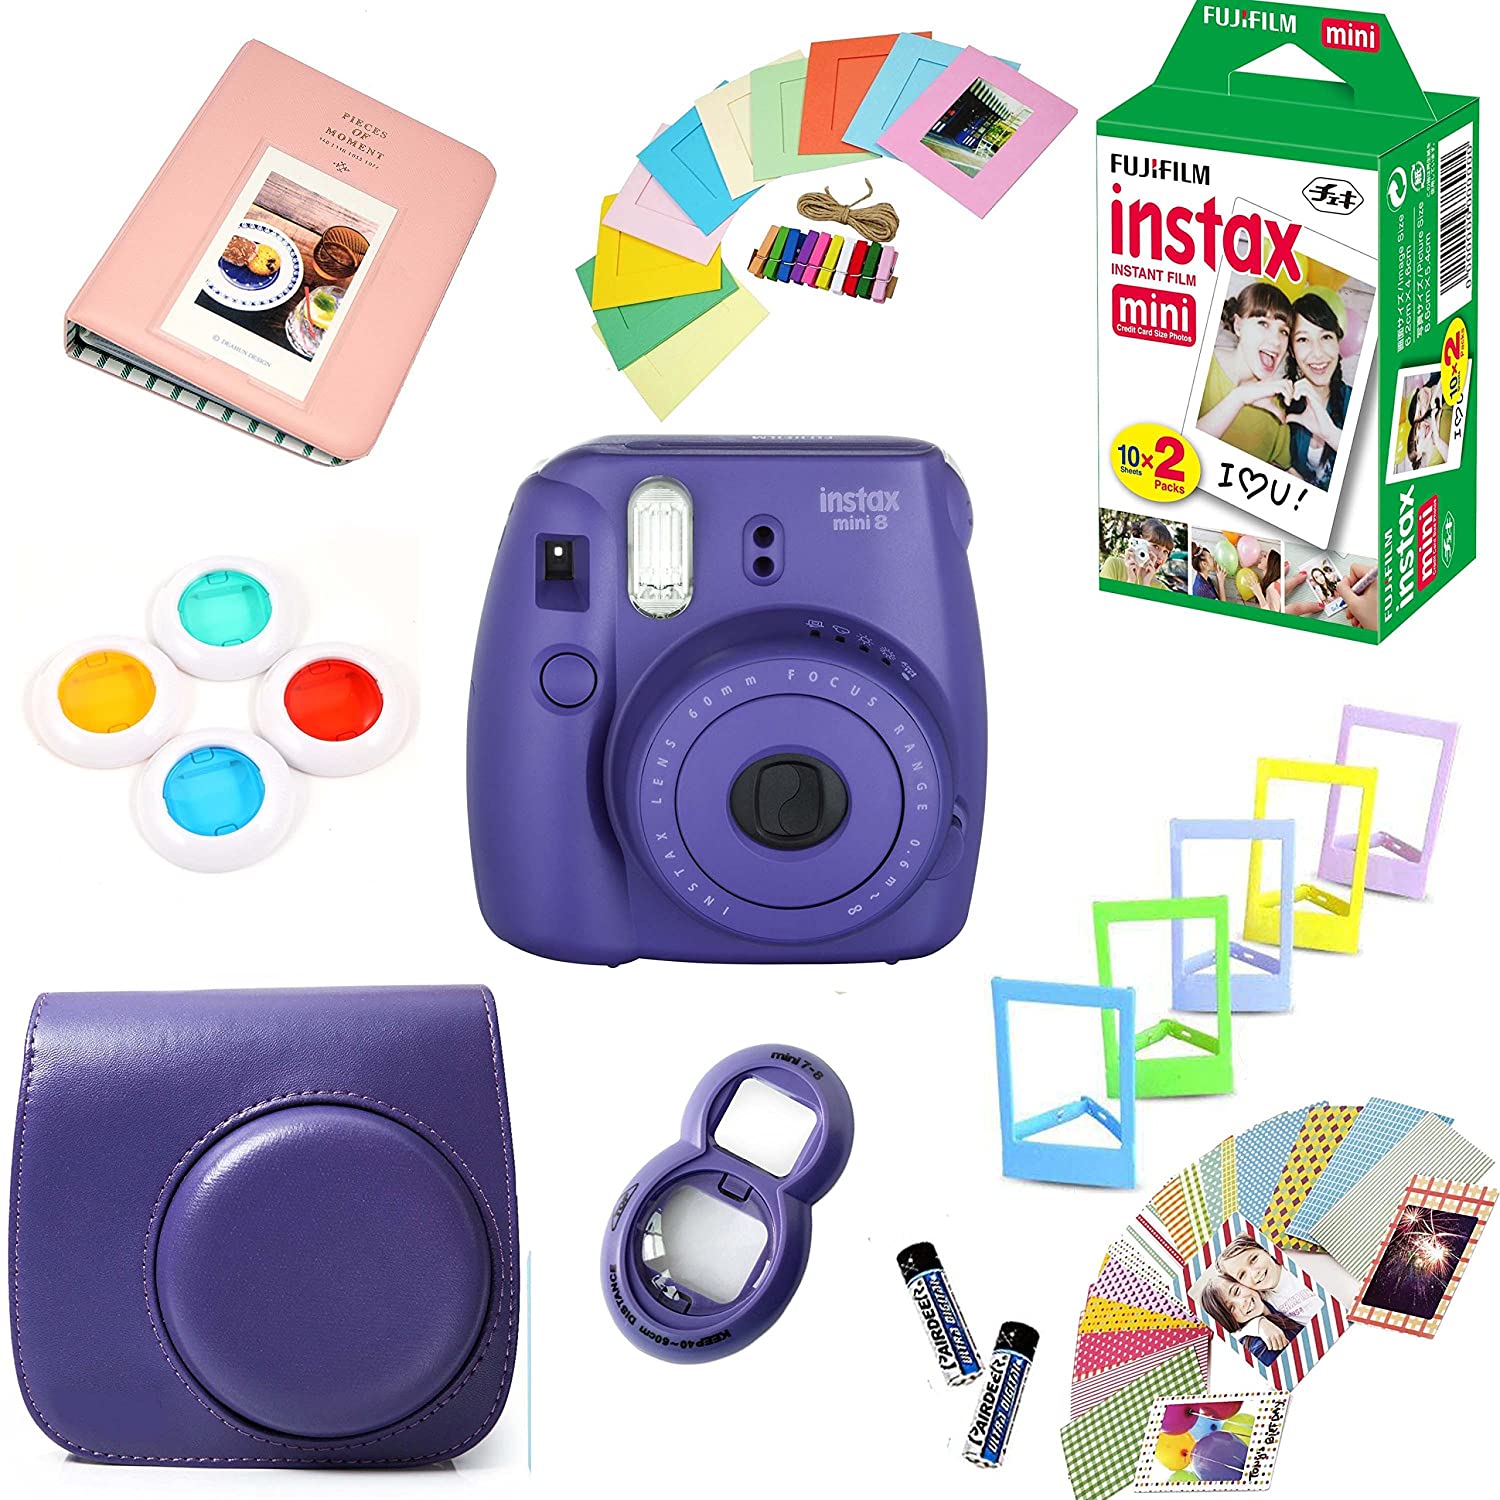 Fujifilm Instax Mini 8 Film Camera (Grape) + Instax Mini Film (20 Shots) + Protective Camera Case + Selfie Lens + Filters + Frames Photix Decorative Design Kit